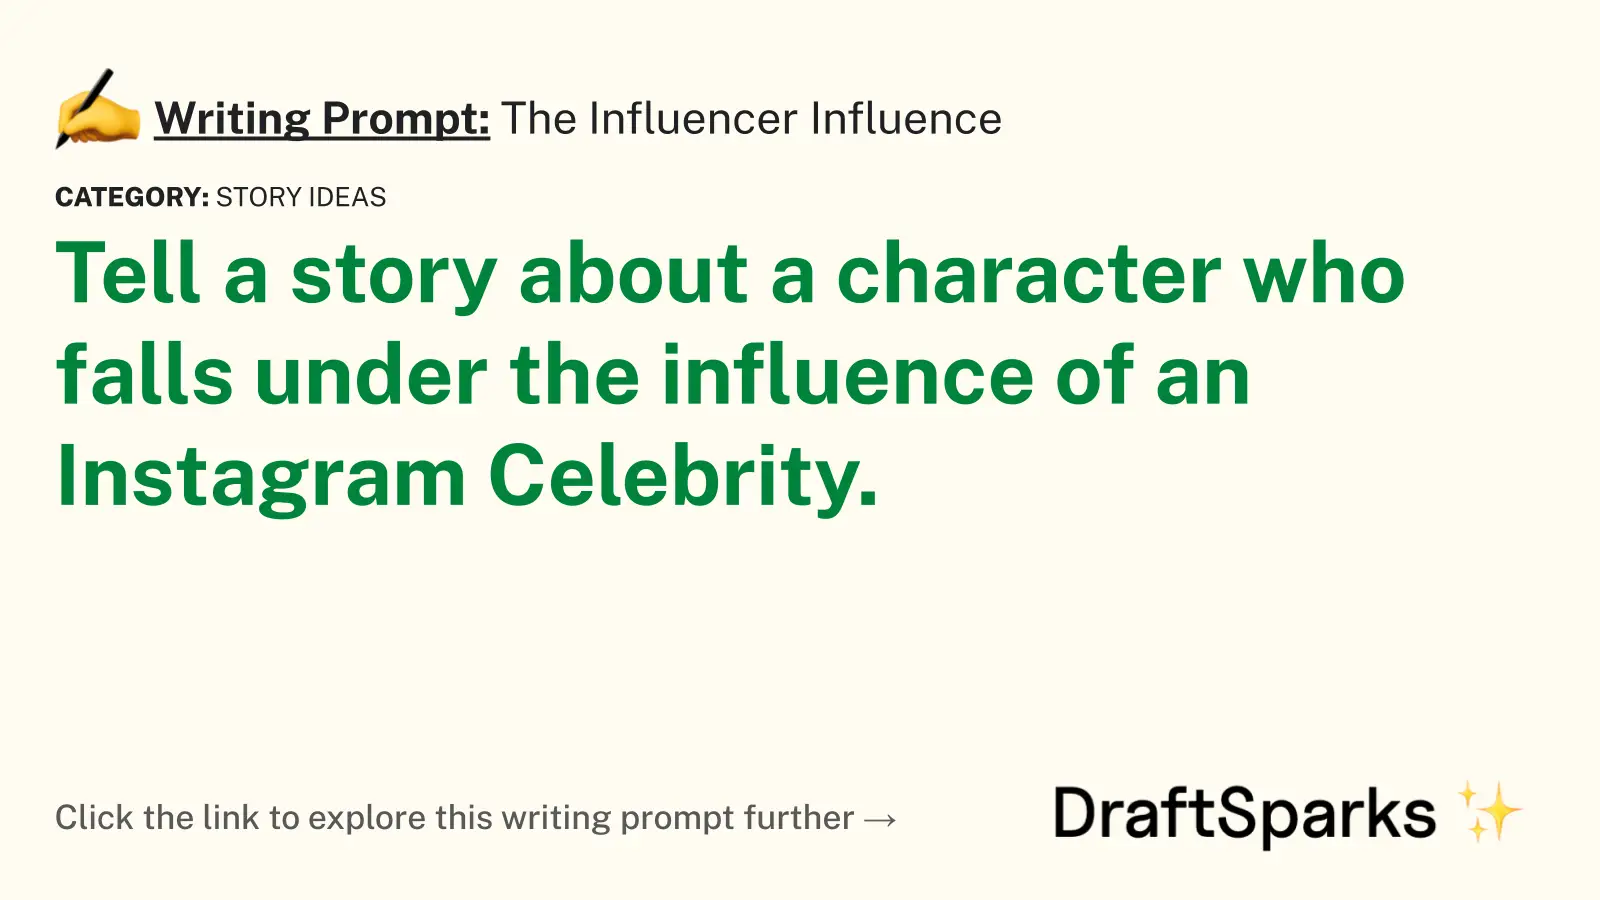 The Influencer Influence